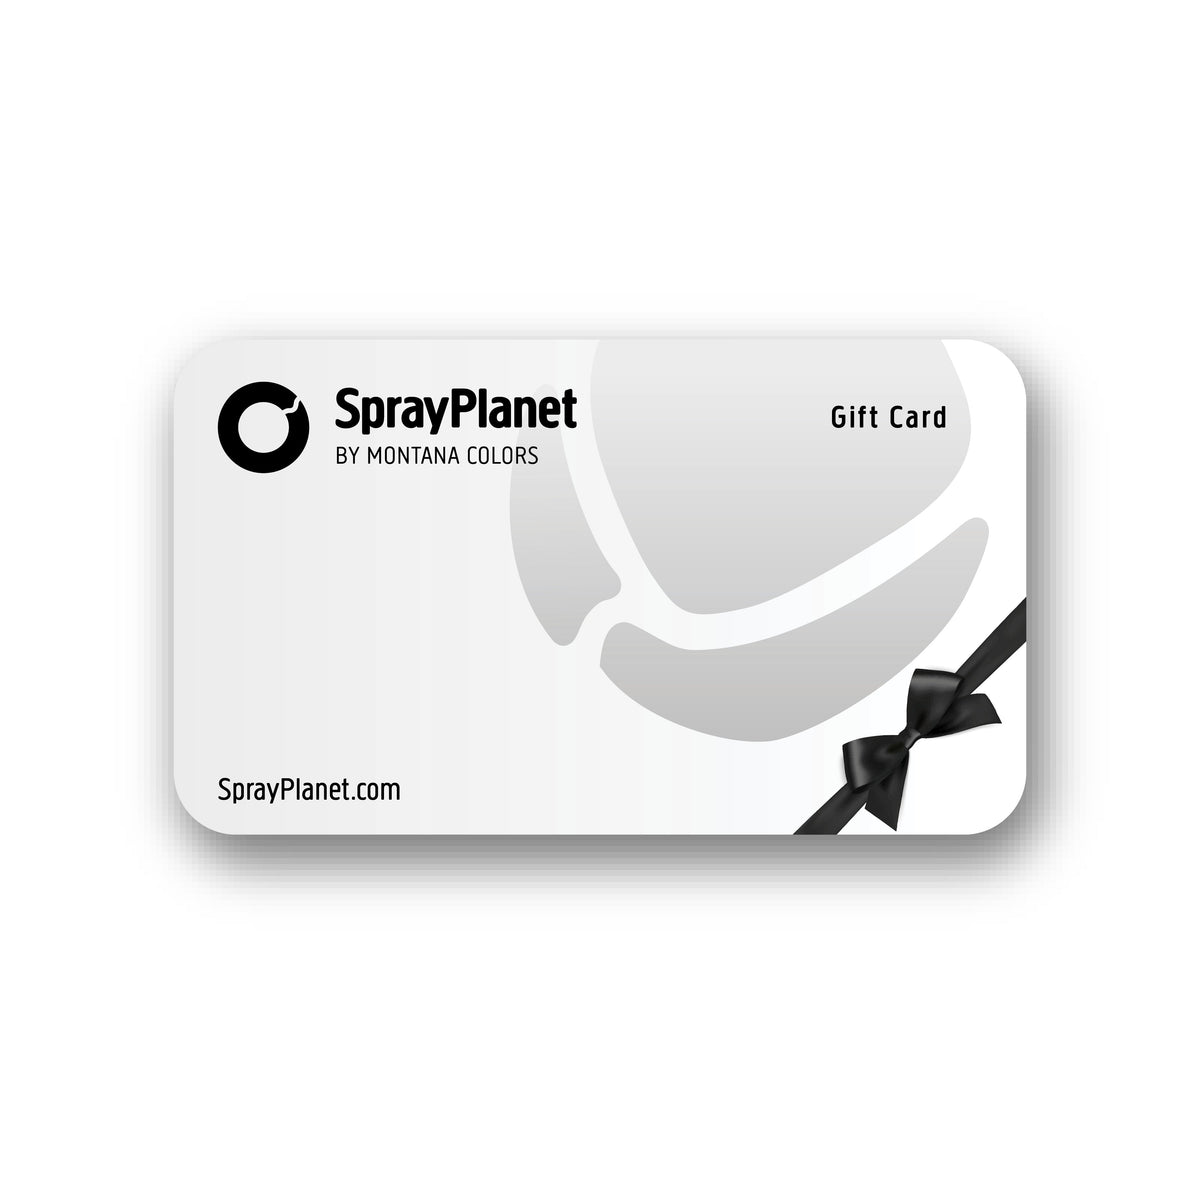 Spray Planet&lt;br&gt; Gift Card - $5